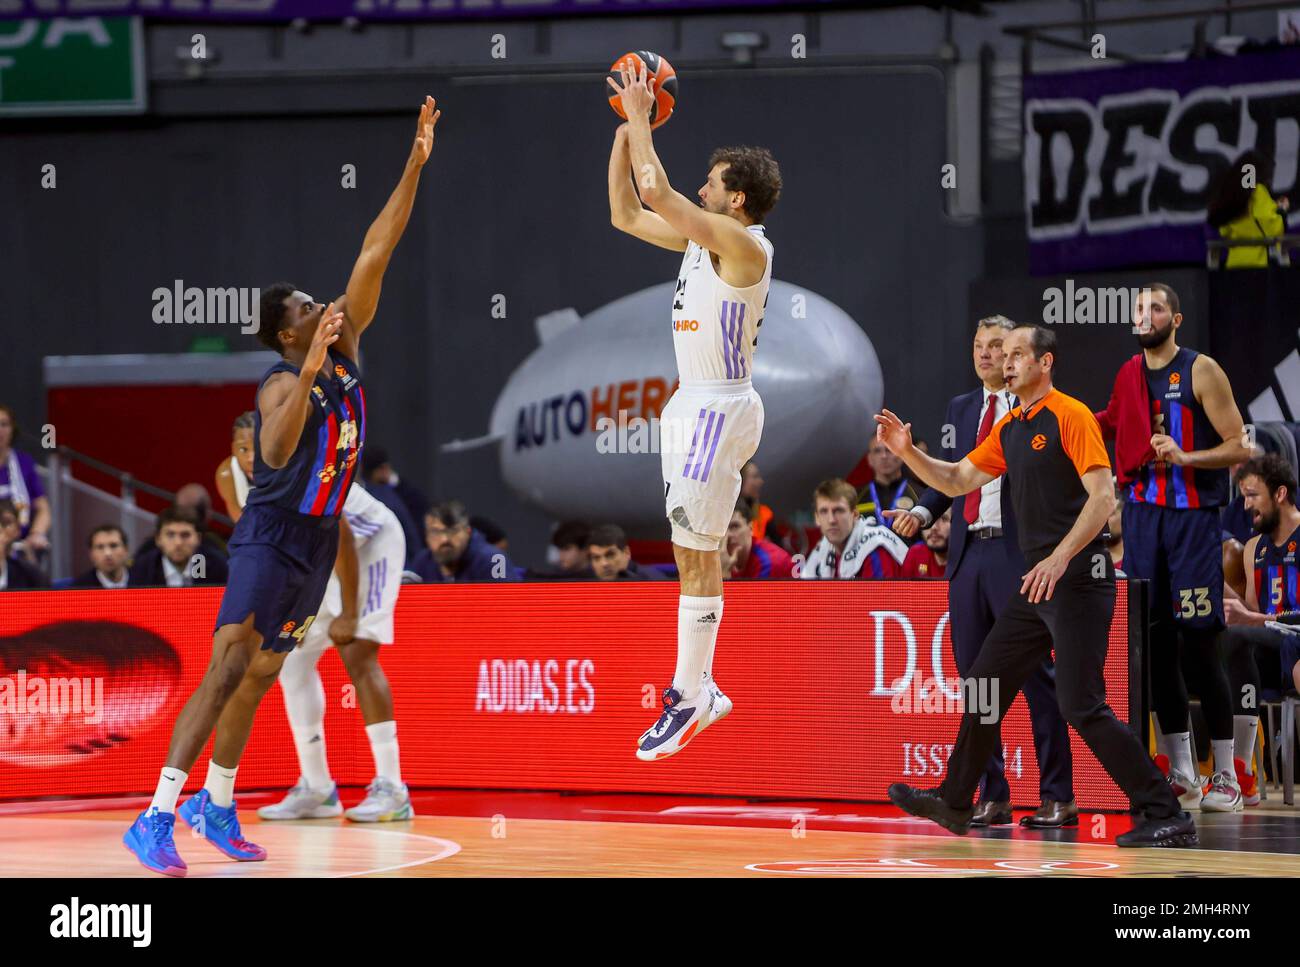 Crvena Zvezda mts Belgrade - Valencia Basket Highlights